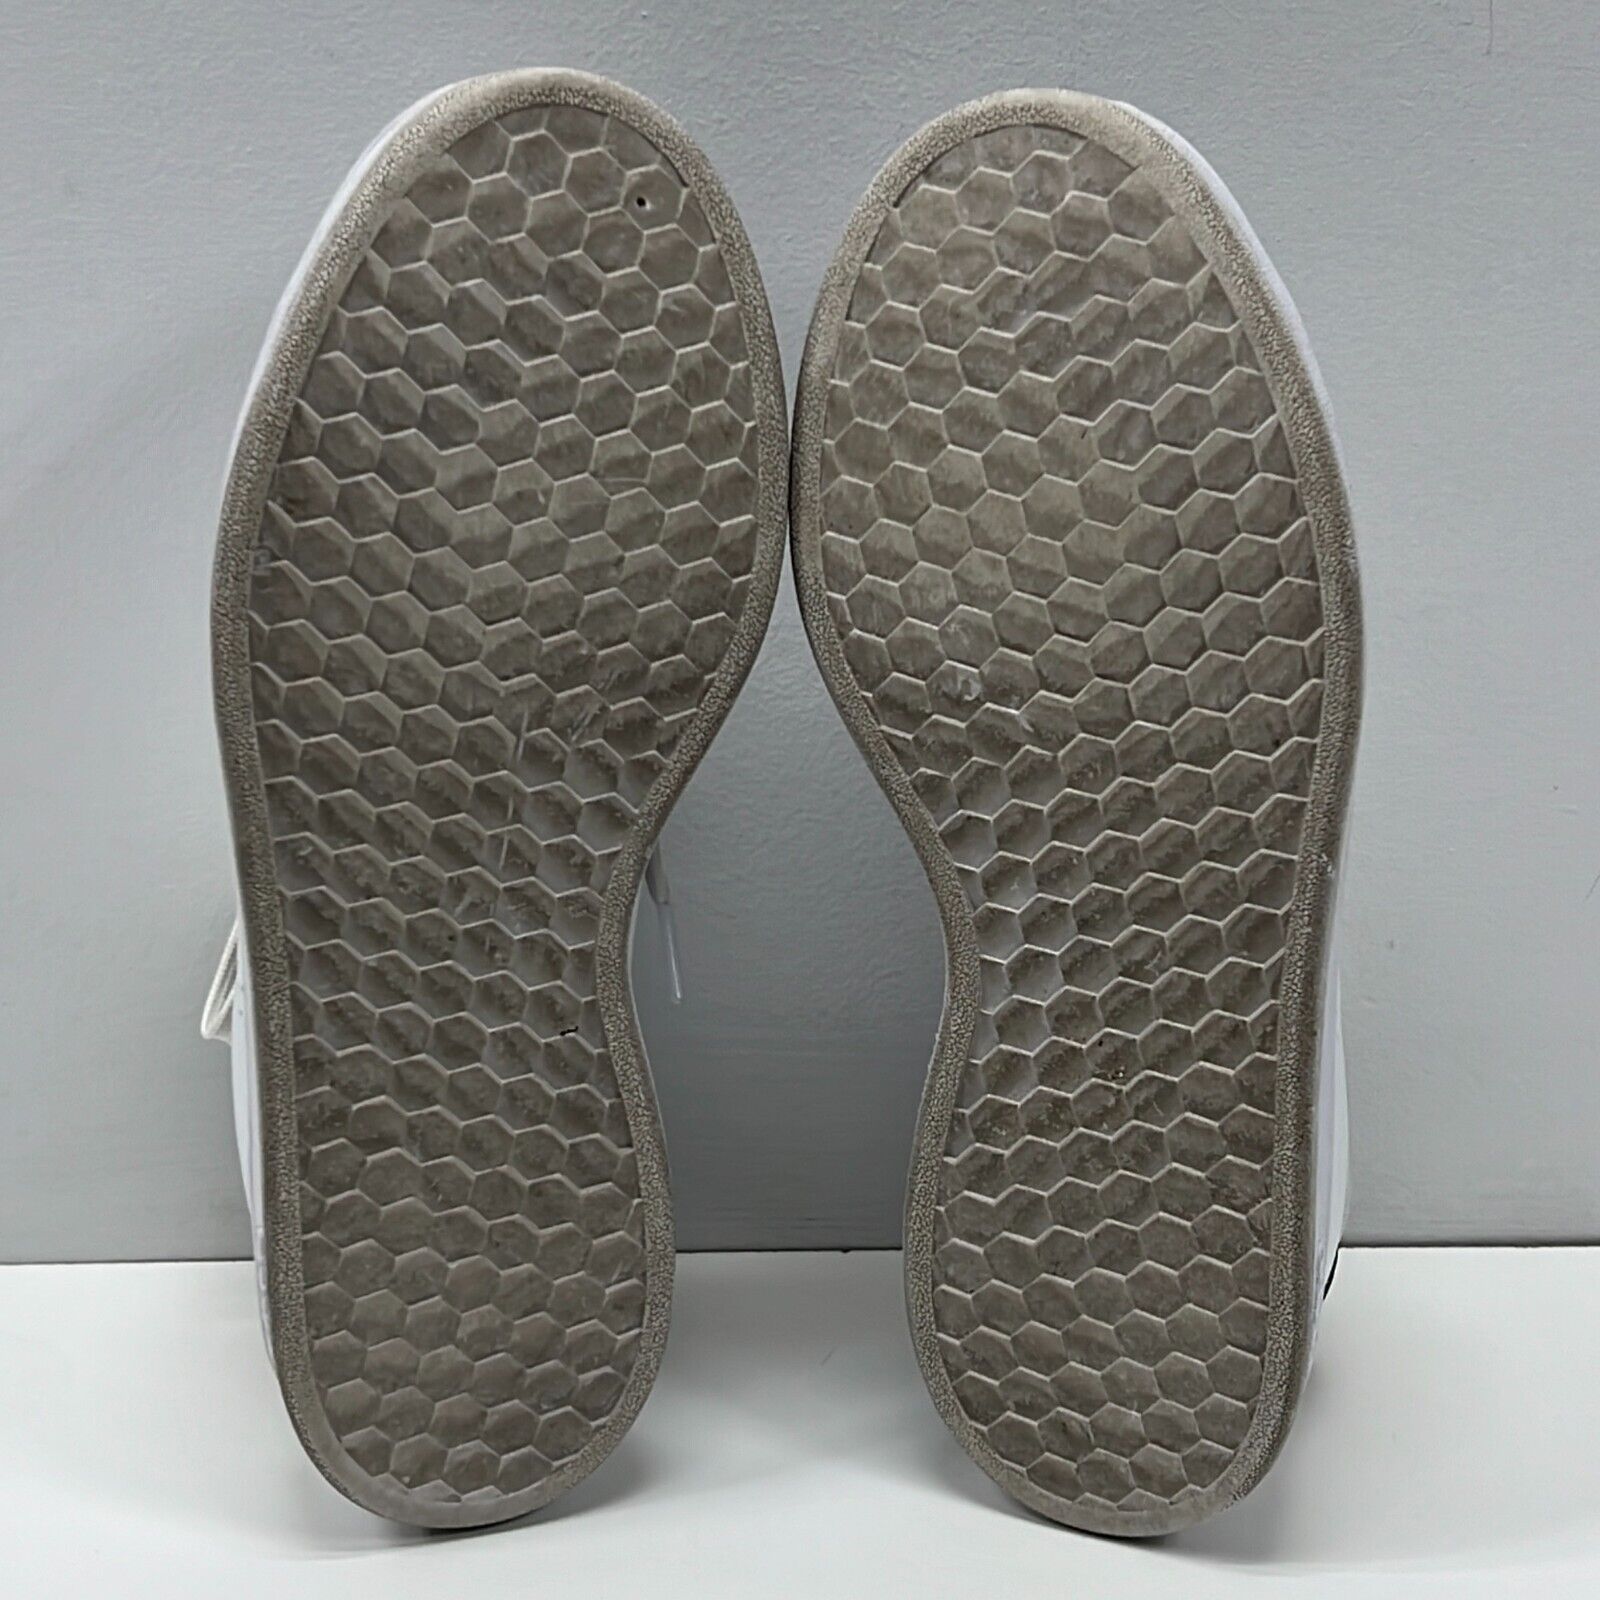 Adidas Women's Advantage F36223 White Low Top Lace-Up Sneaker Shoes Size 7.5